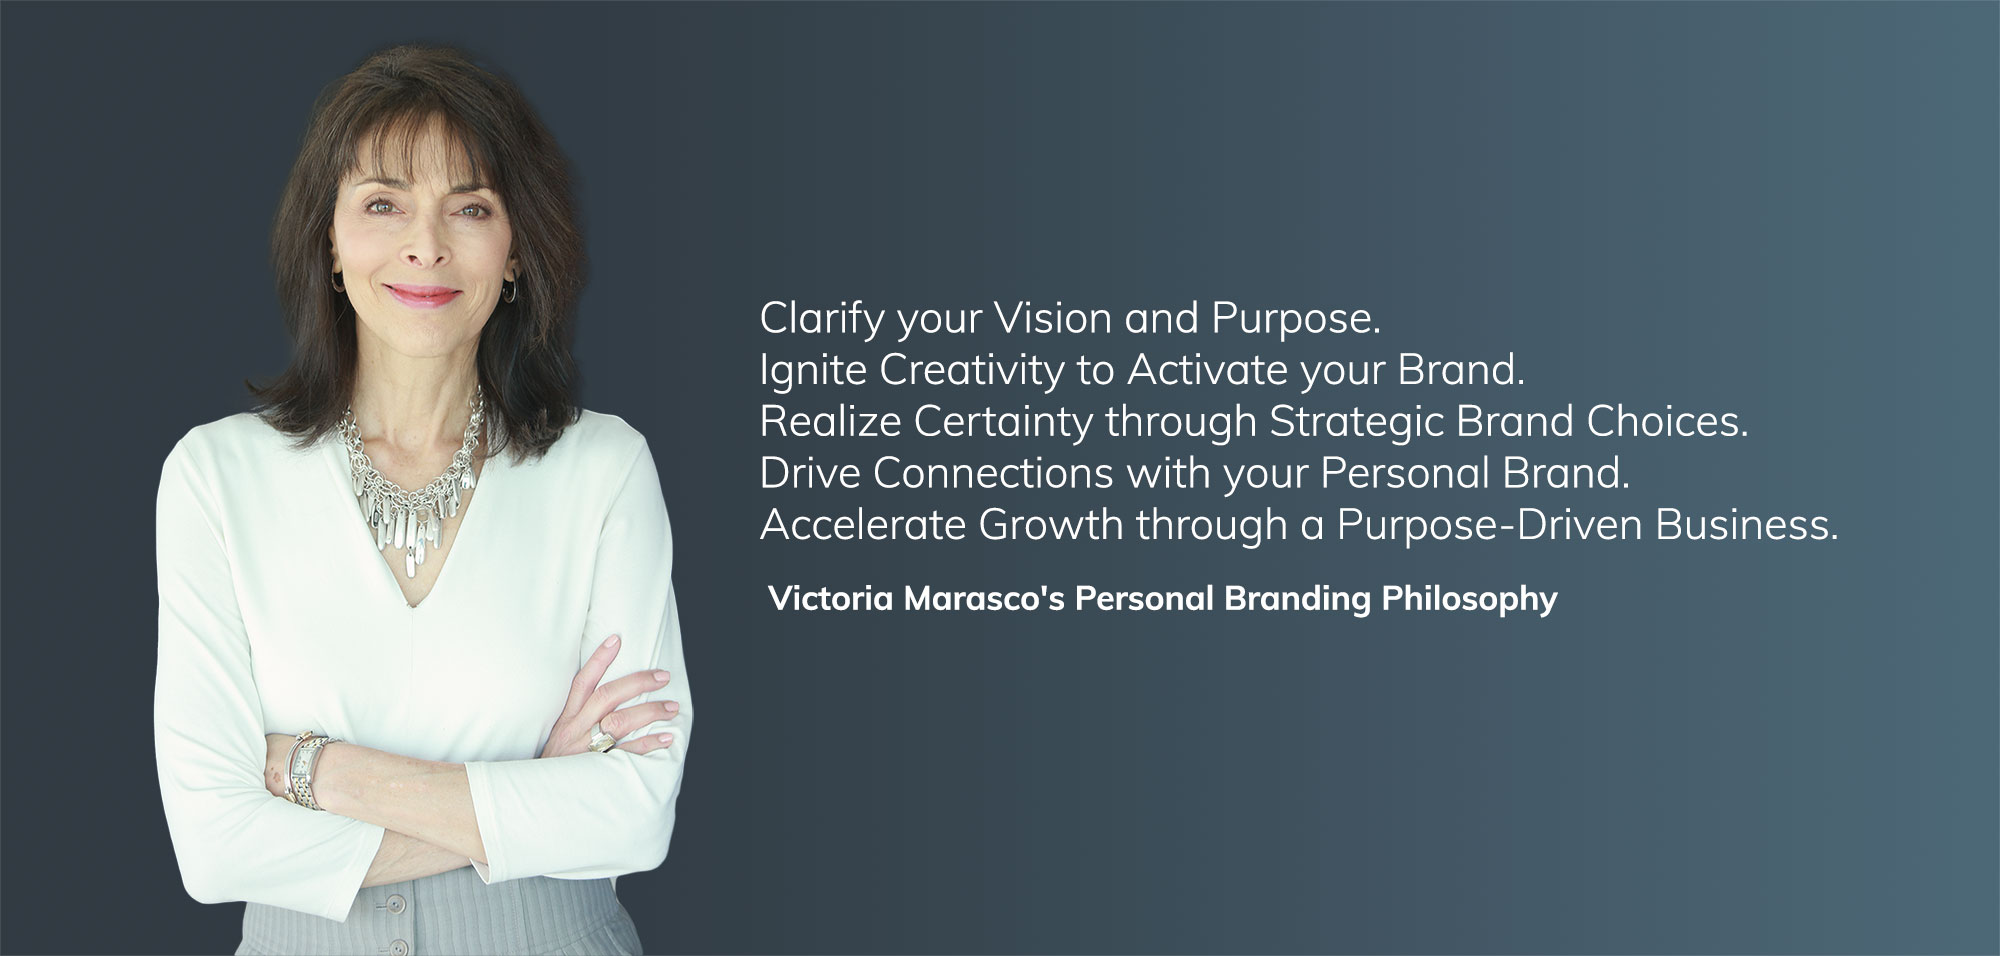 Victoria Marasco - Personal Brand Philosophy